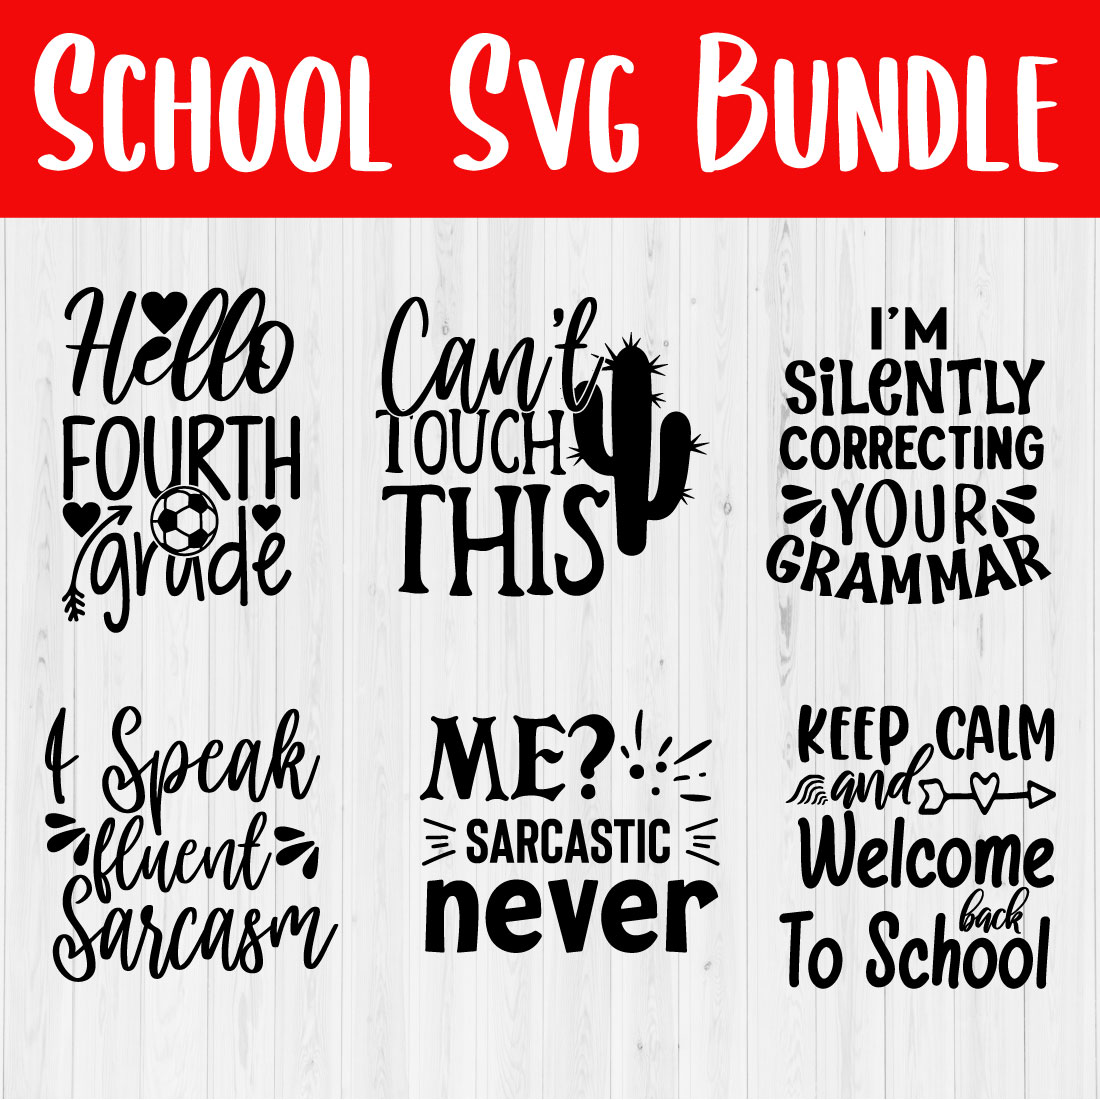 School Svg Design Bundle Vol2 preview image.